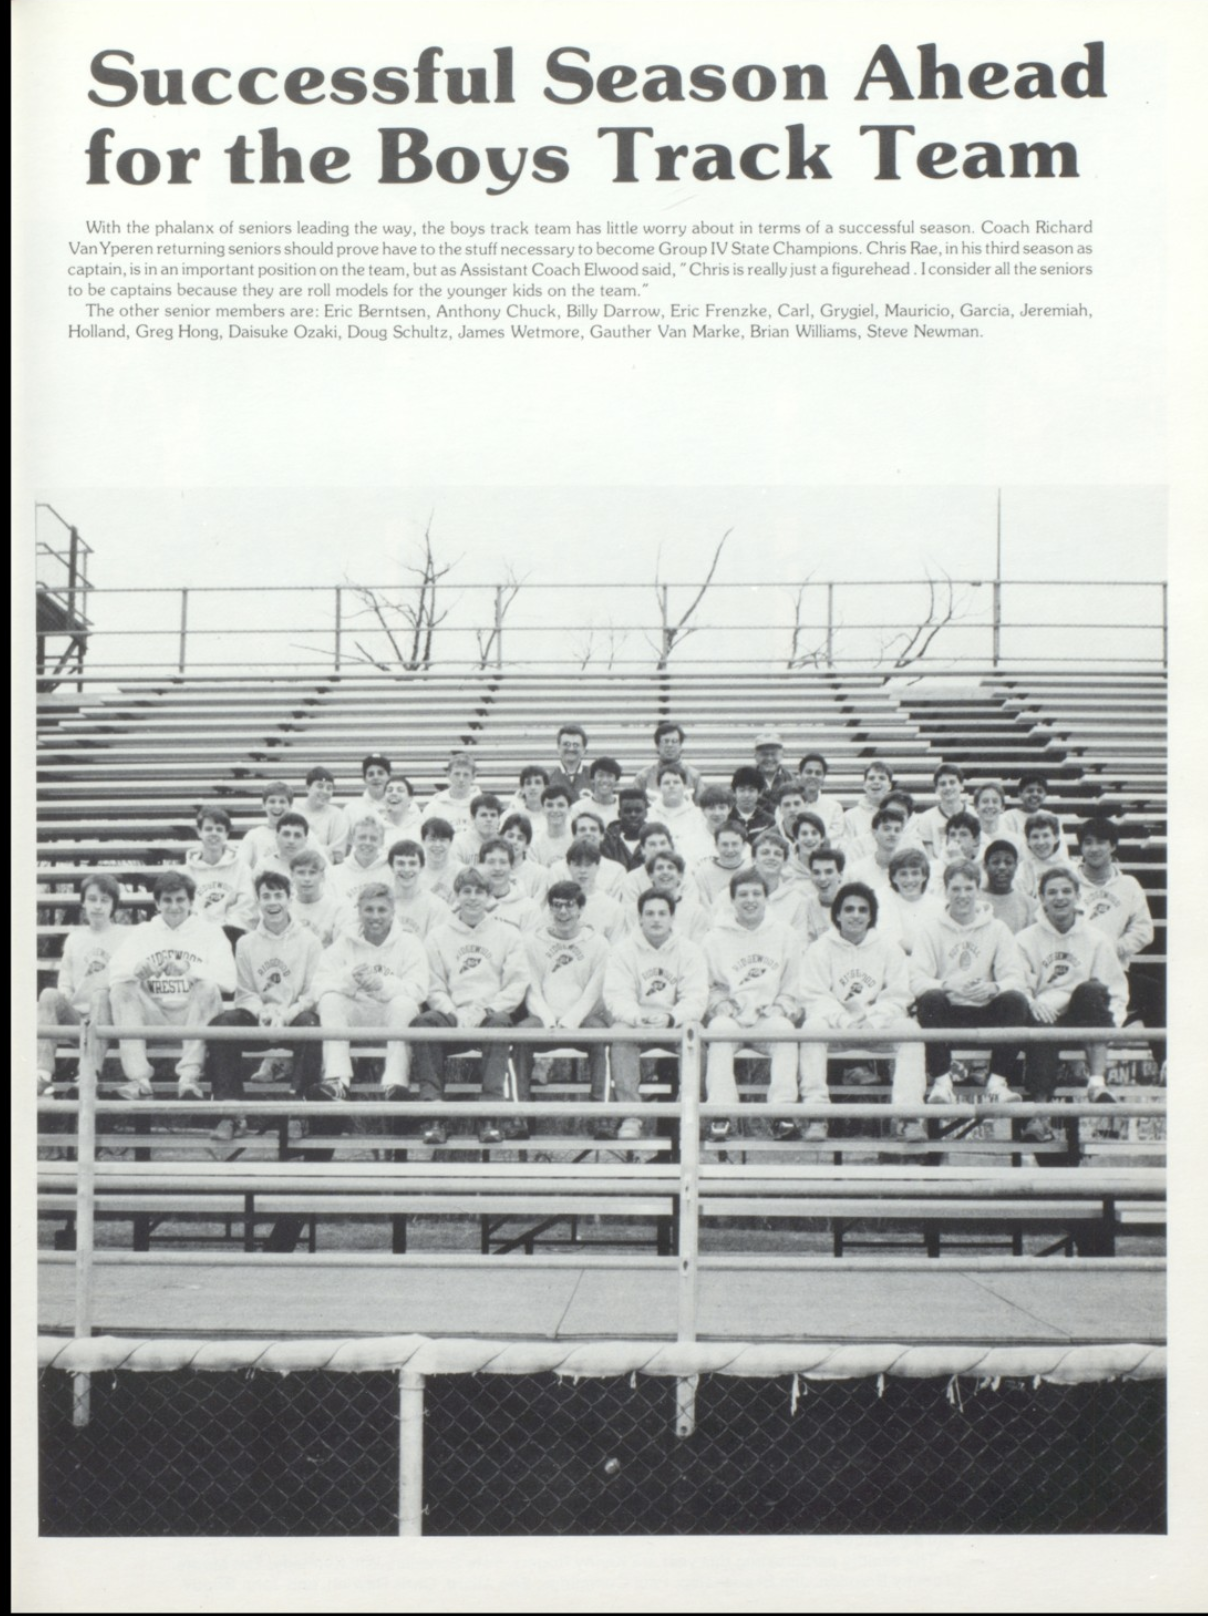 1987 Boys’ Track Team